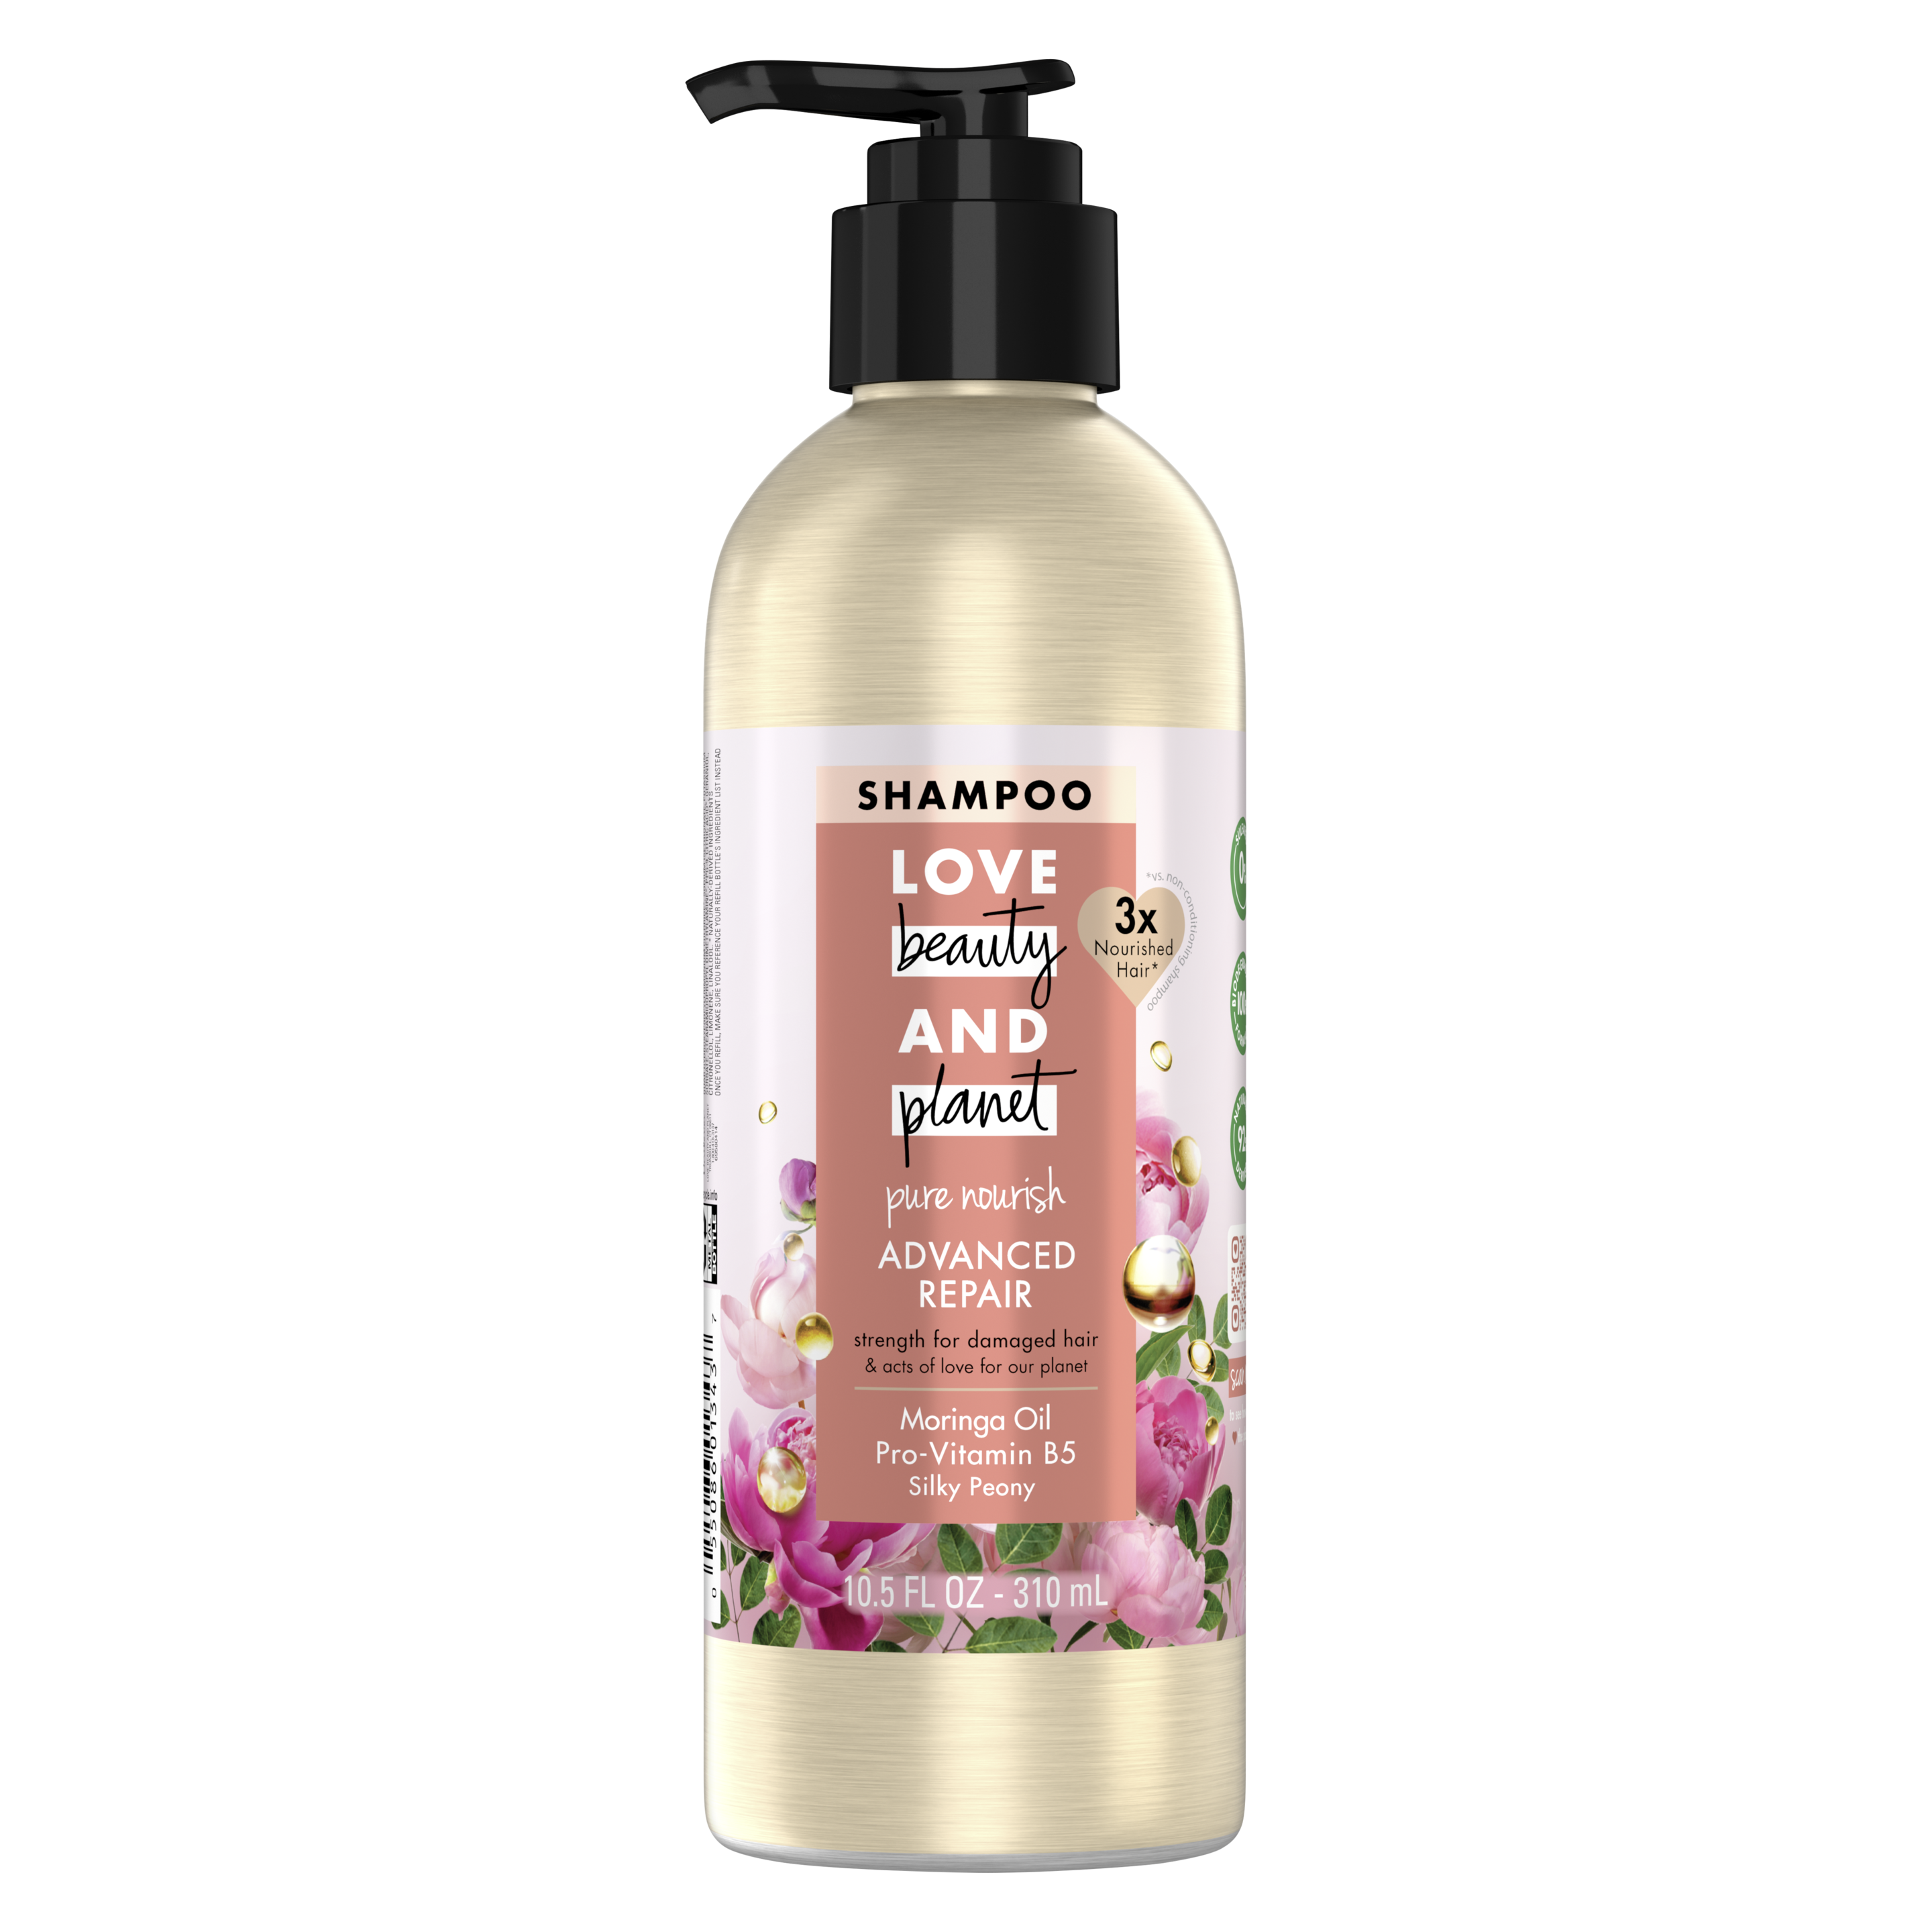 sulfate-free moringa oil & pro-vitamin B5 shampoo